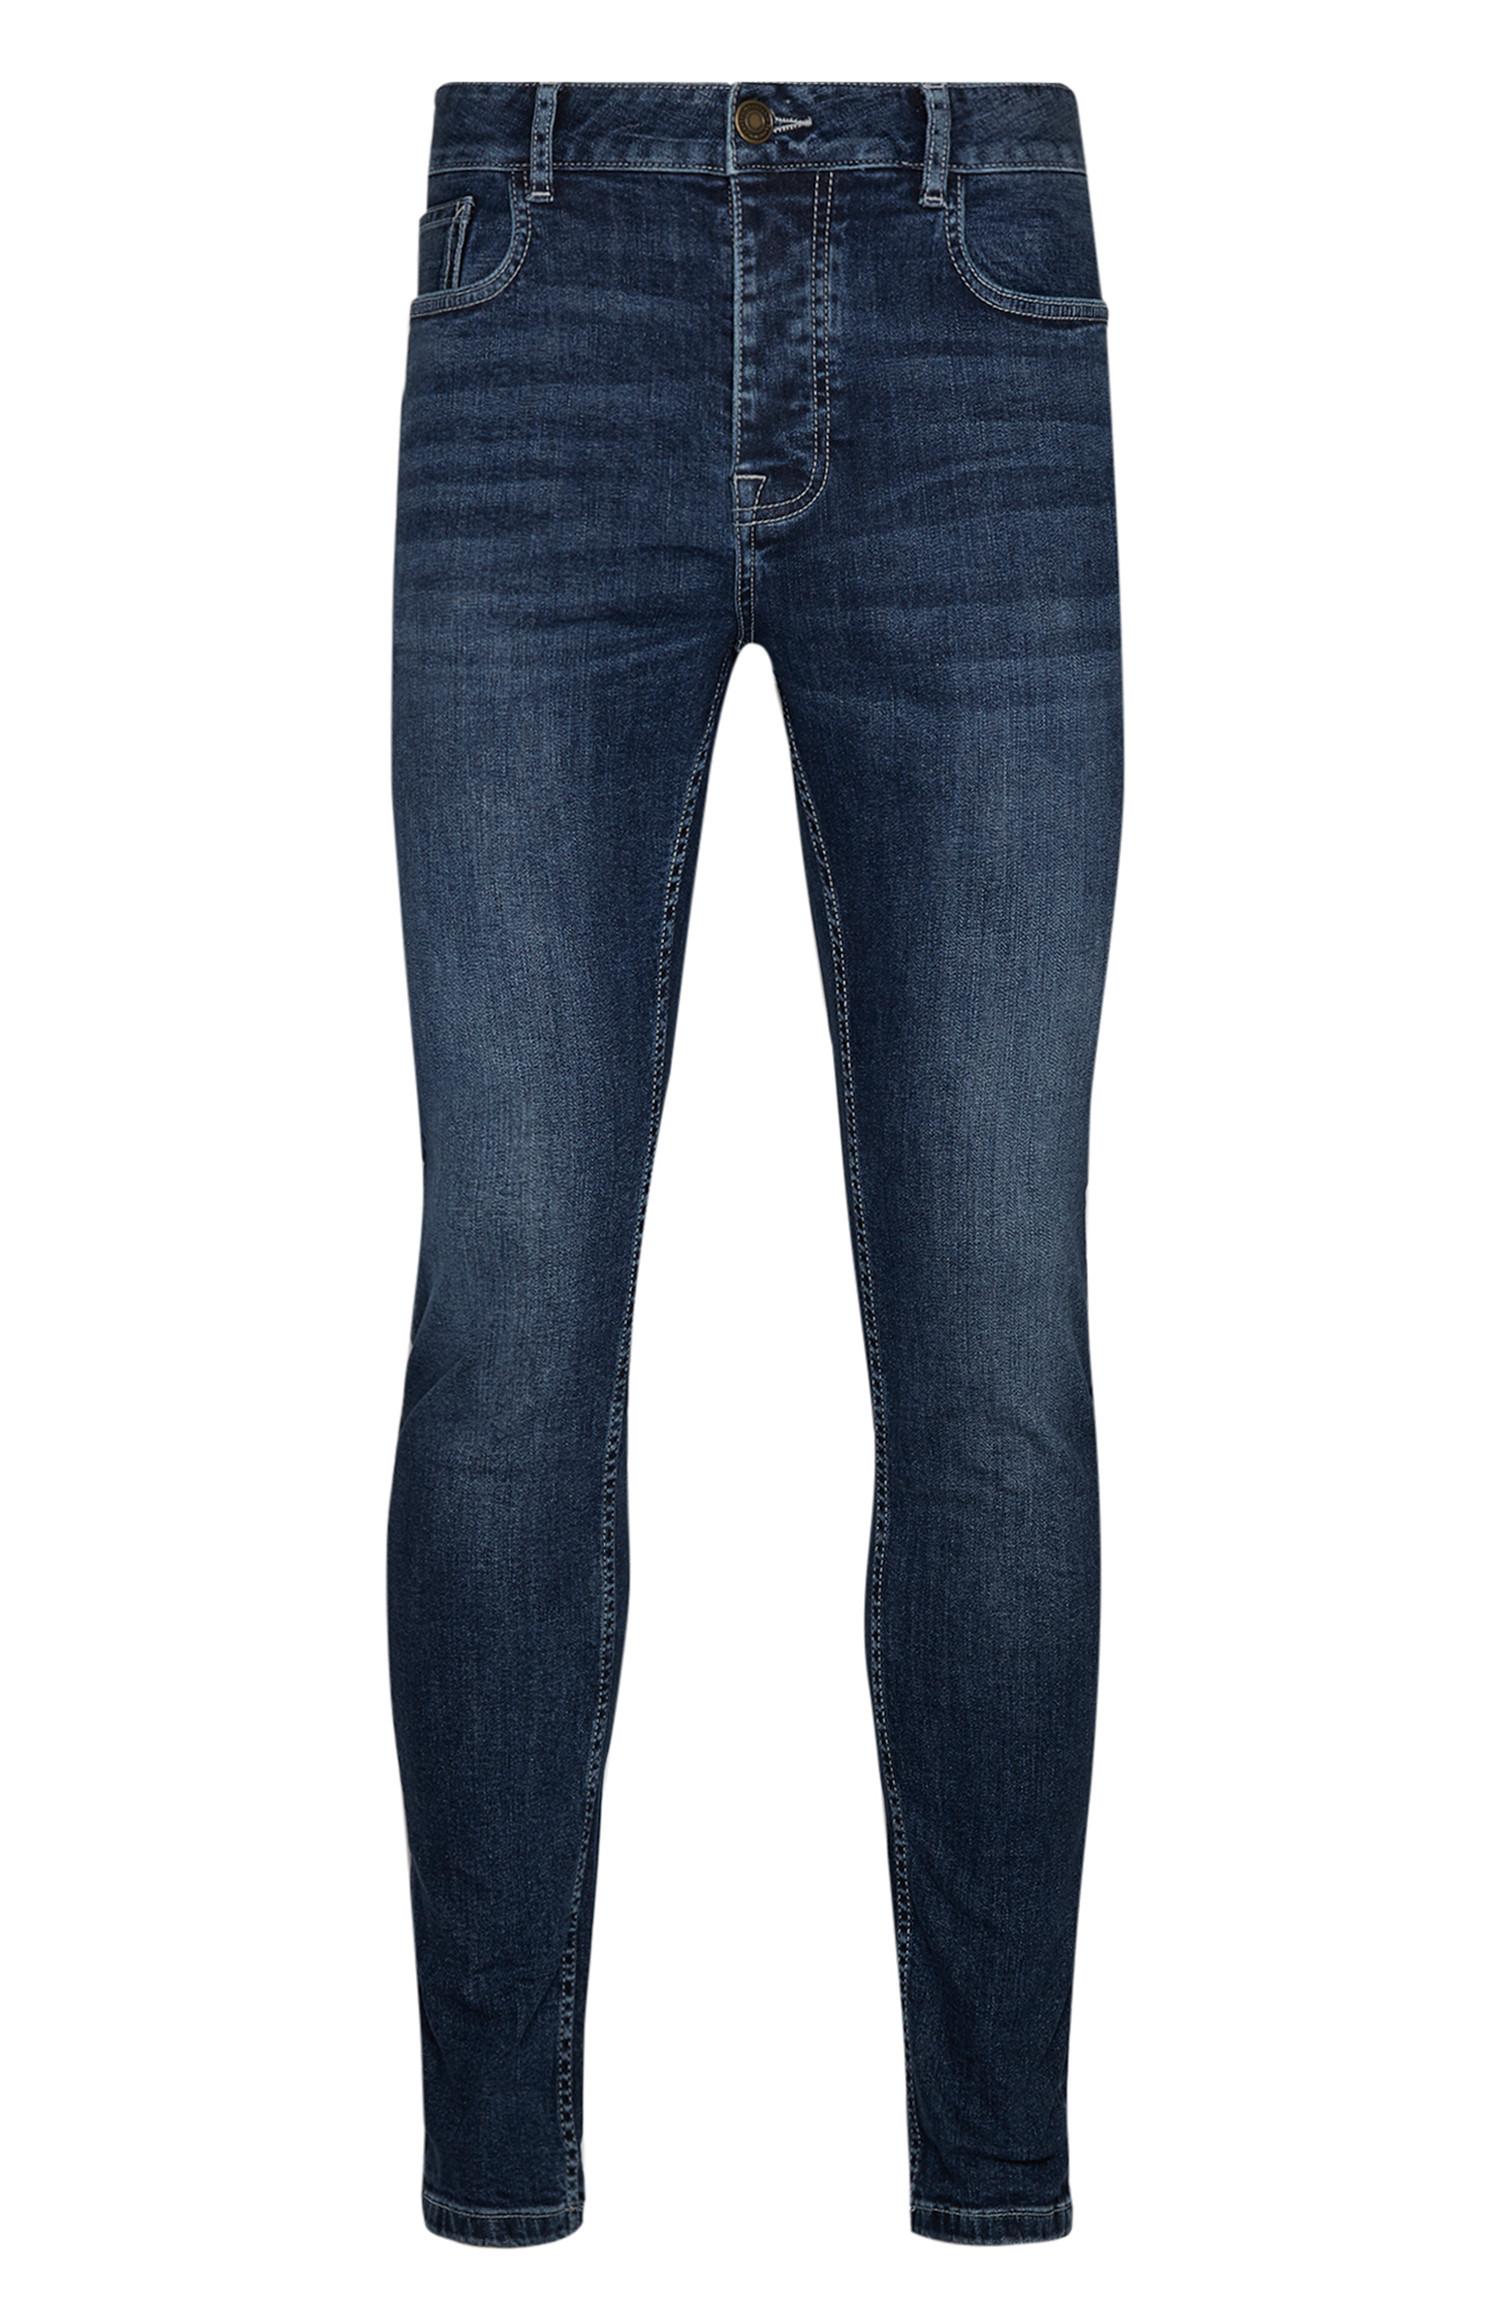 abercrombie black skinny jeans